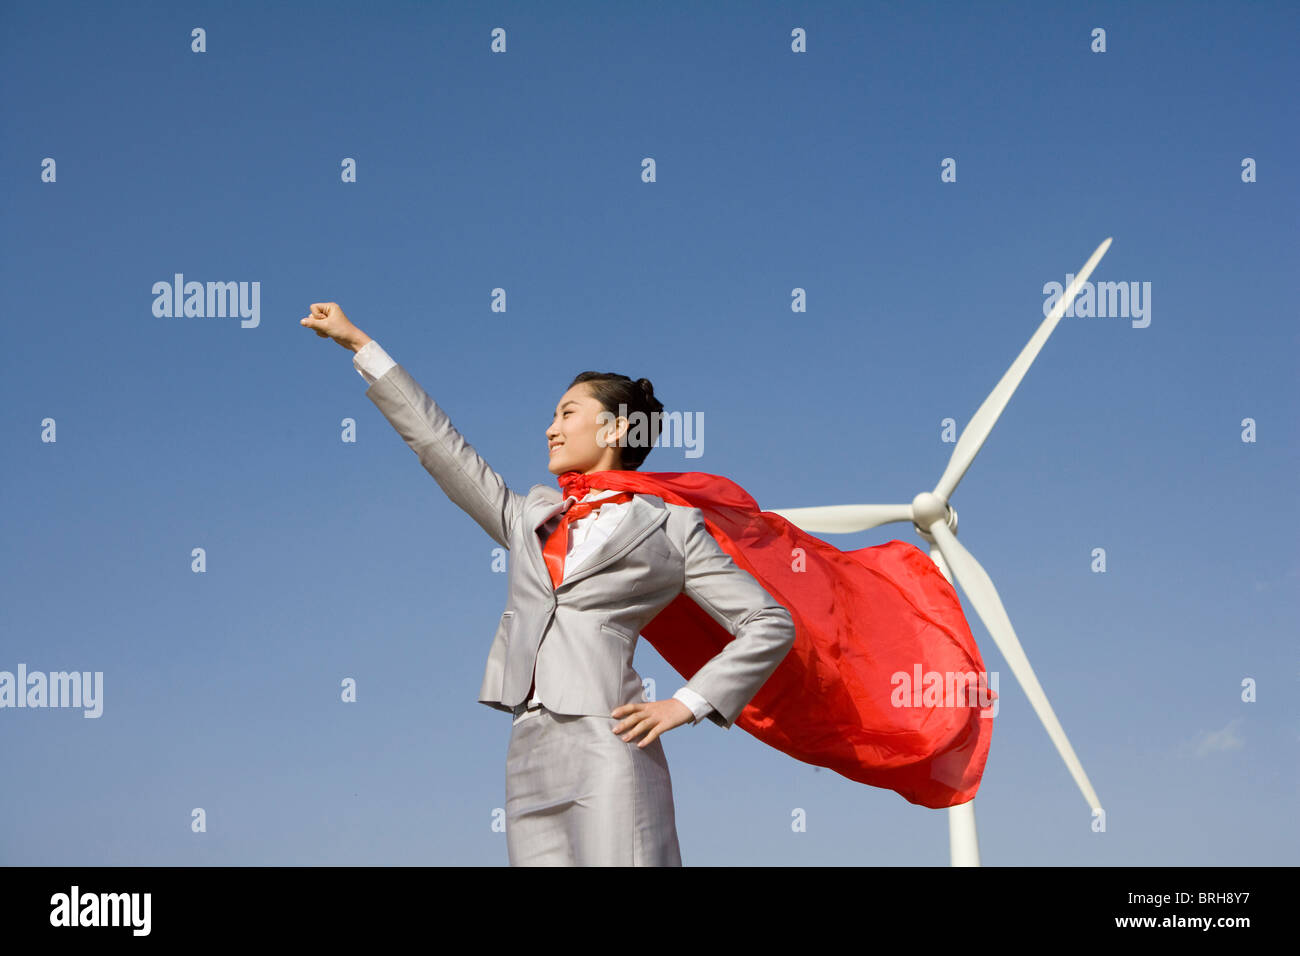 Everyday hero in front of wind turbines Stock Photo